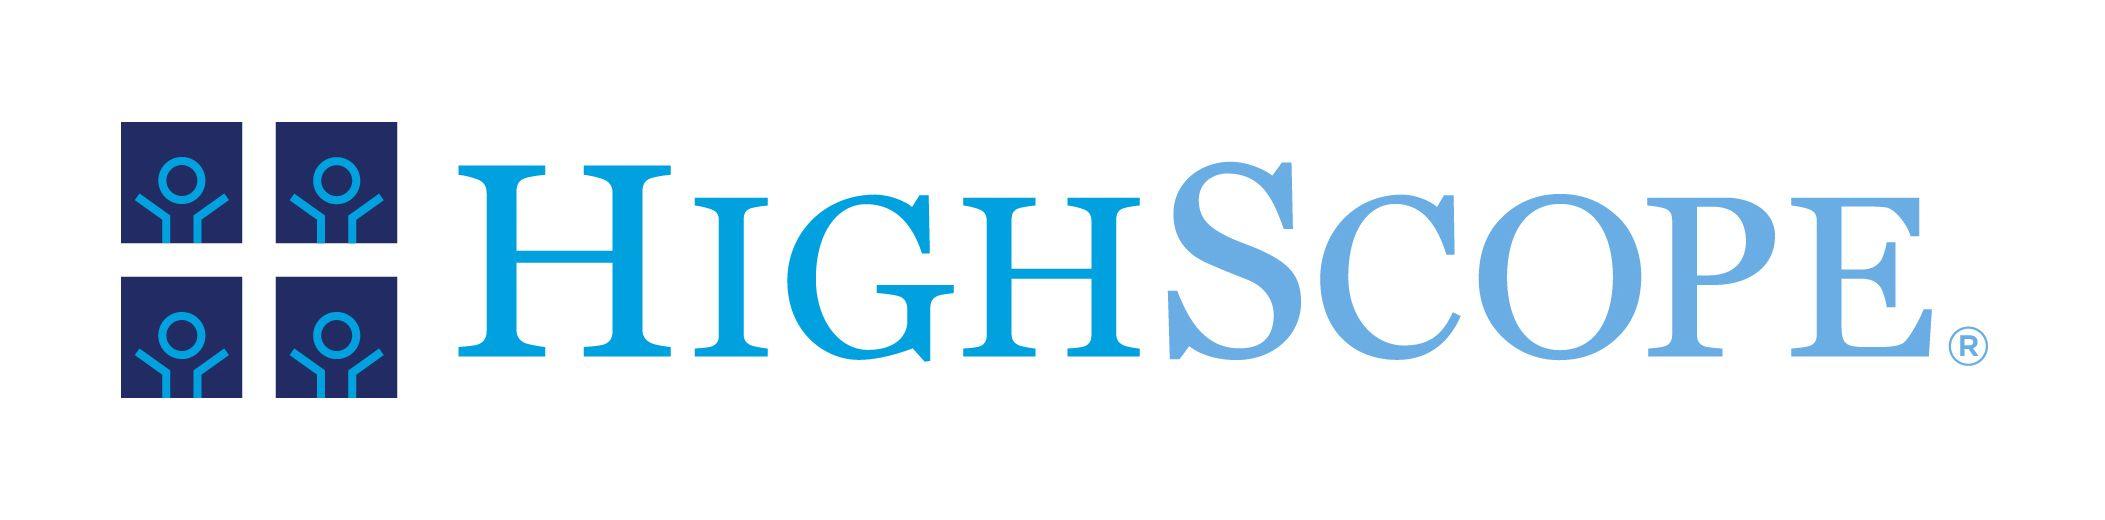 Highscope logo